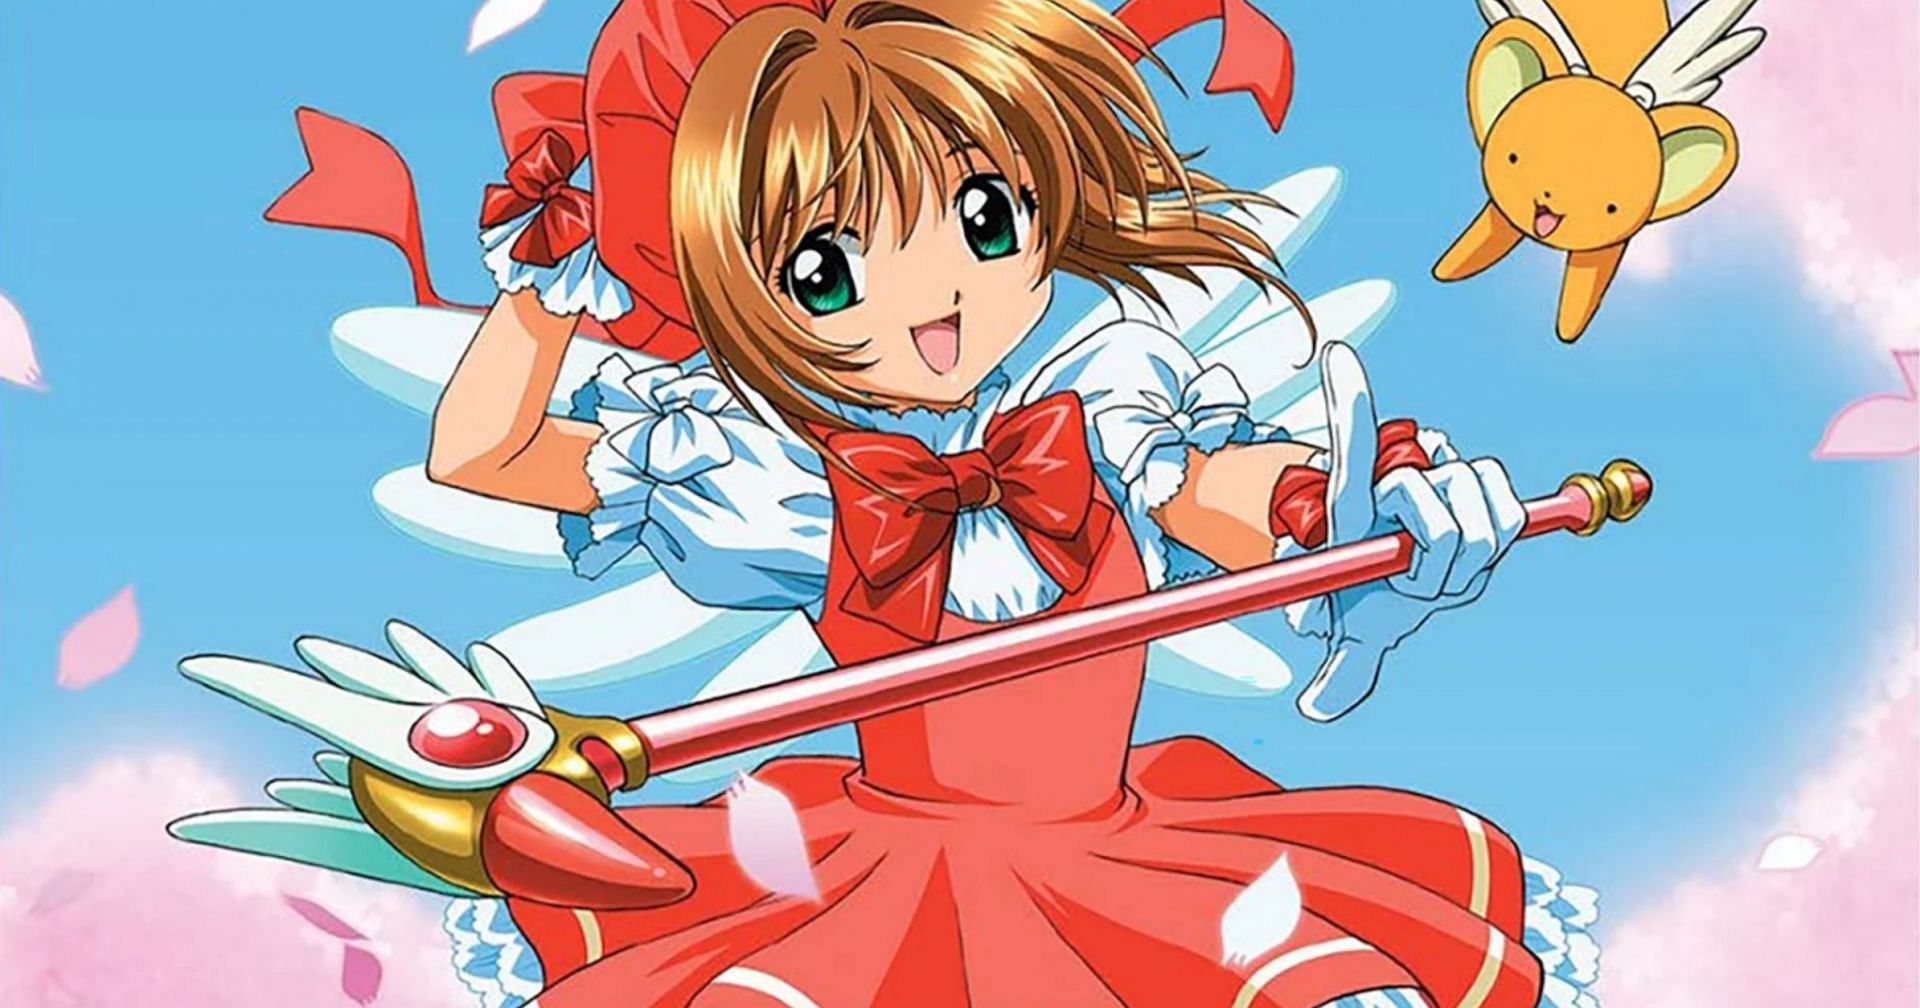 Cardcaptor Sakura Anime(image via Madhouse)